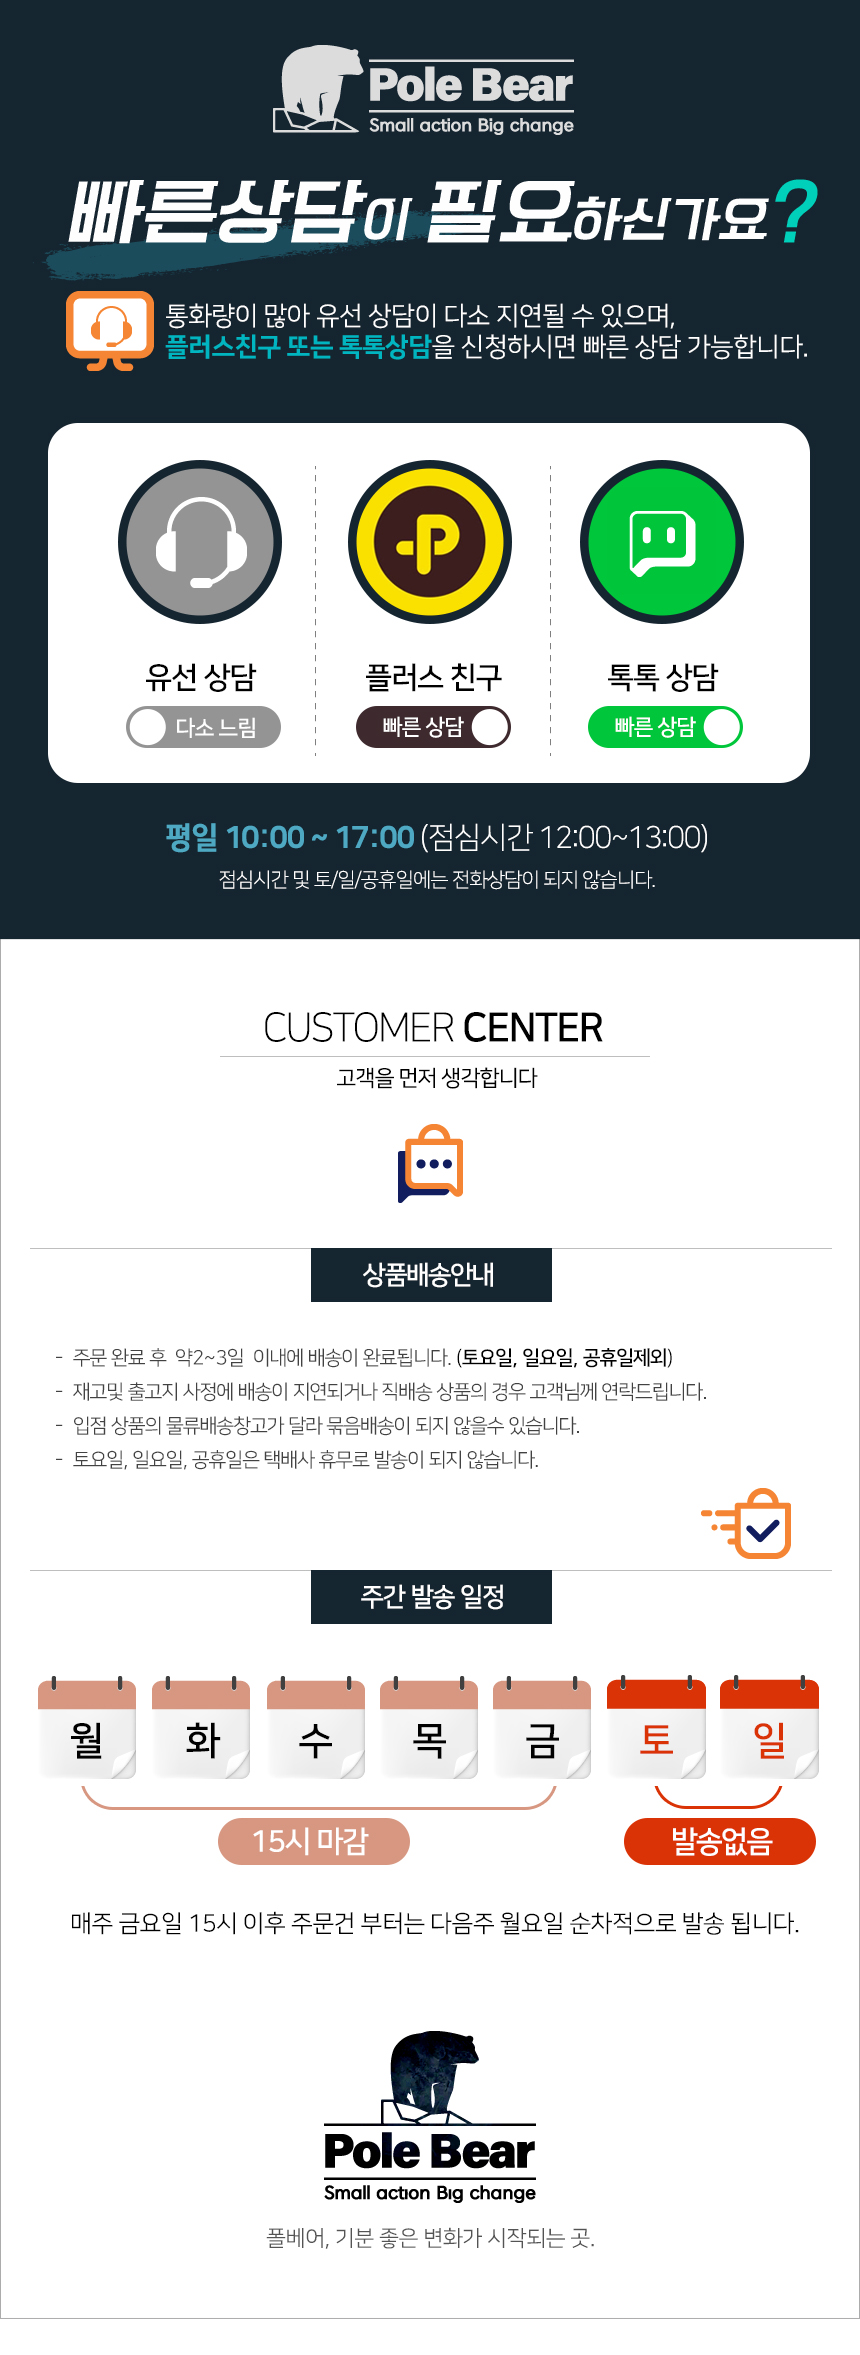 Customer-service.jpg